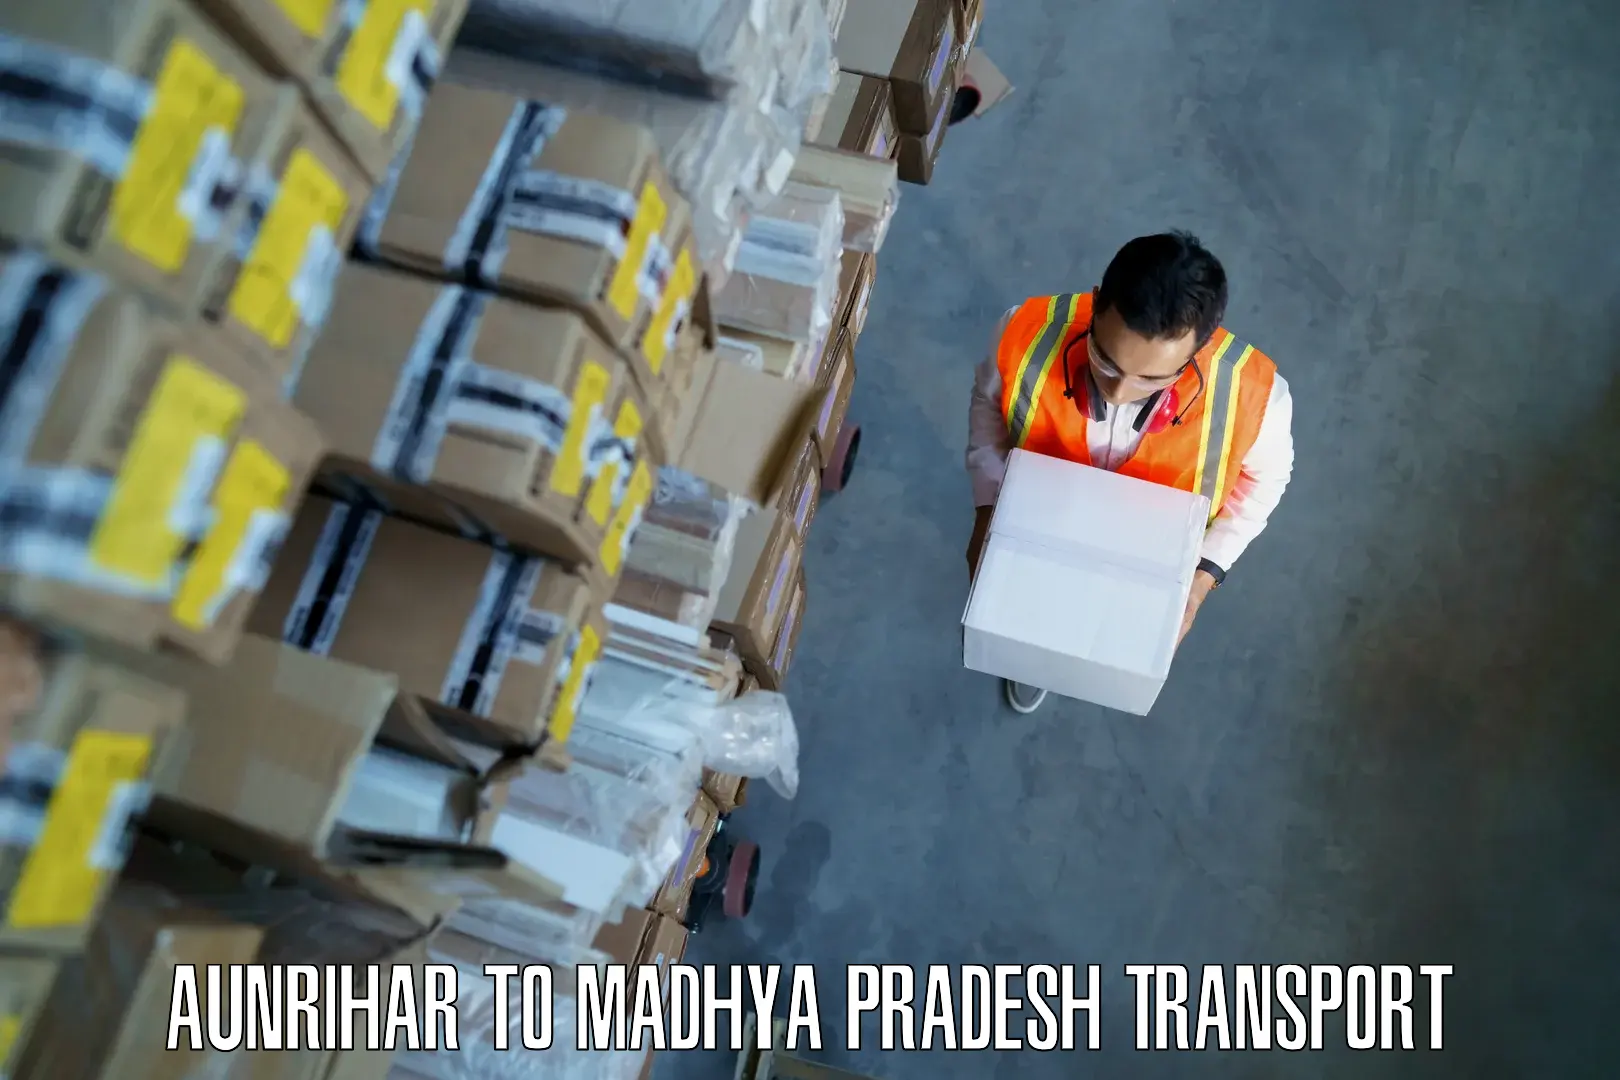 Furniture transport service Aunrihar to Maheshwar